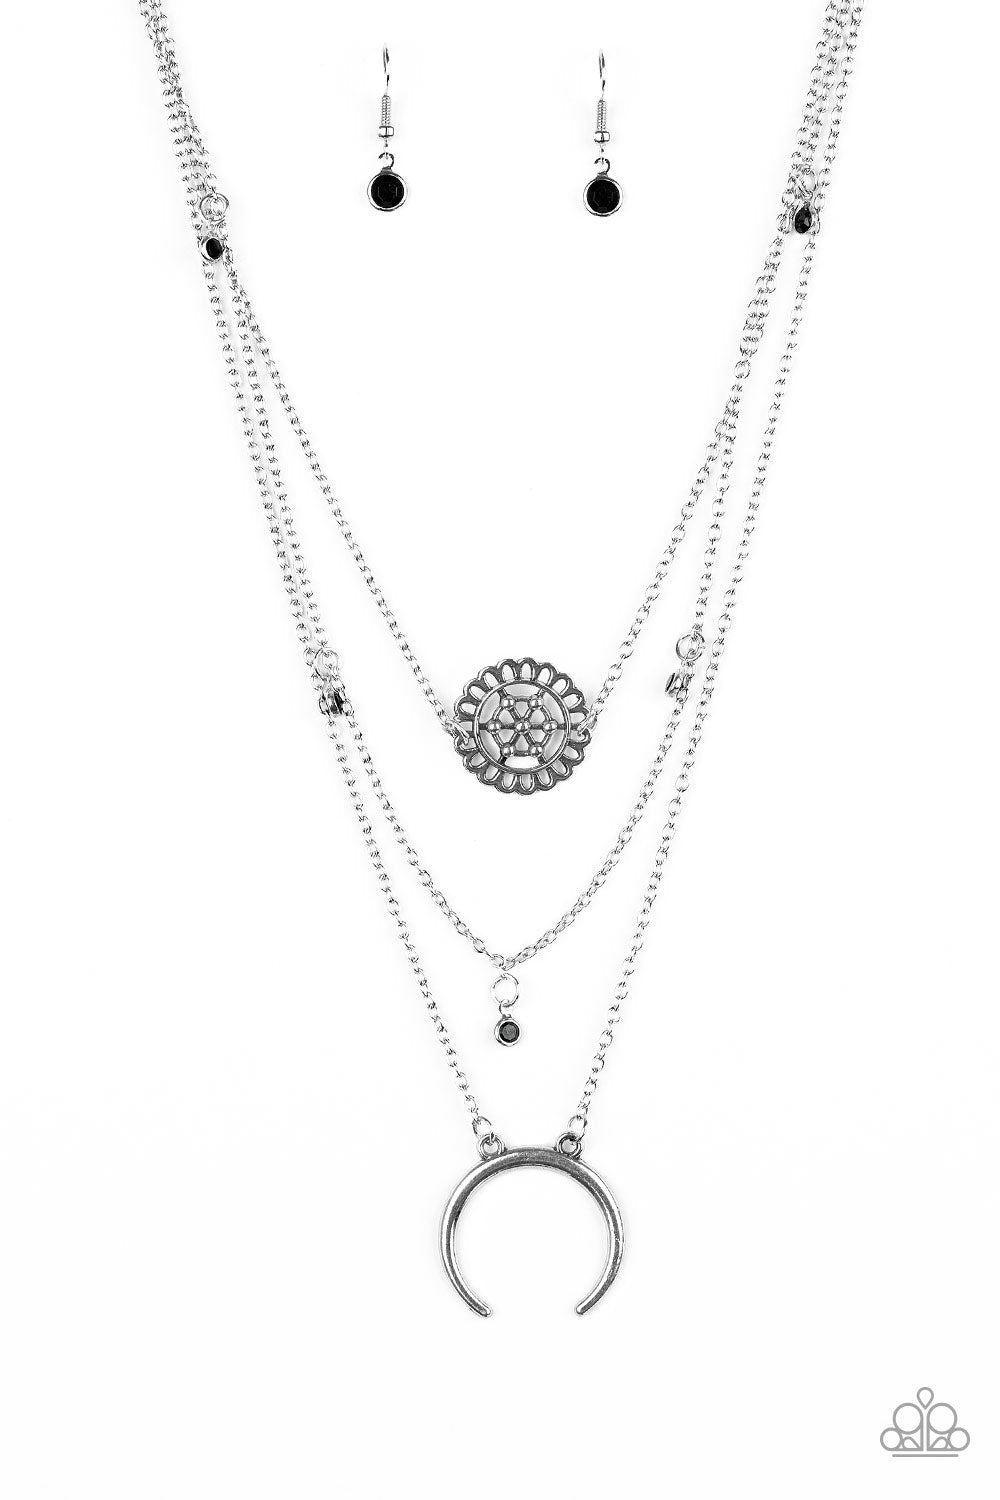 Lunar Lotus - Black Necklace freeshipping - JewLz4u Gemstone Gallery